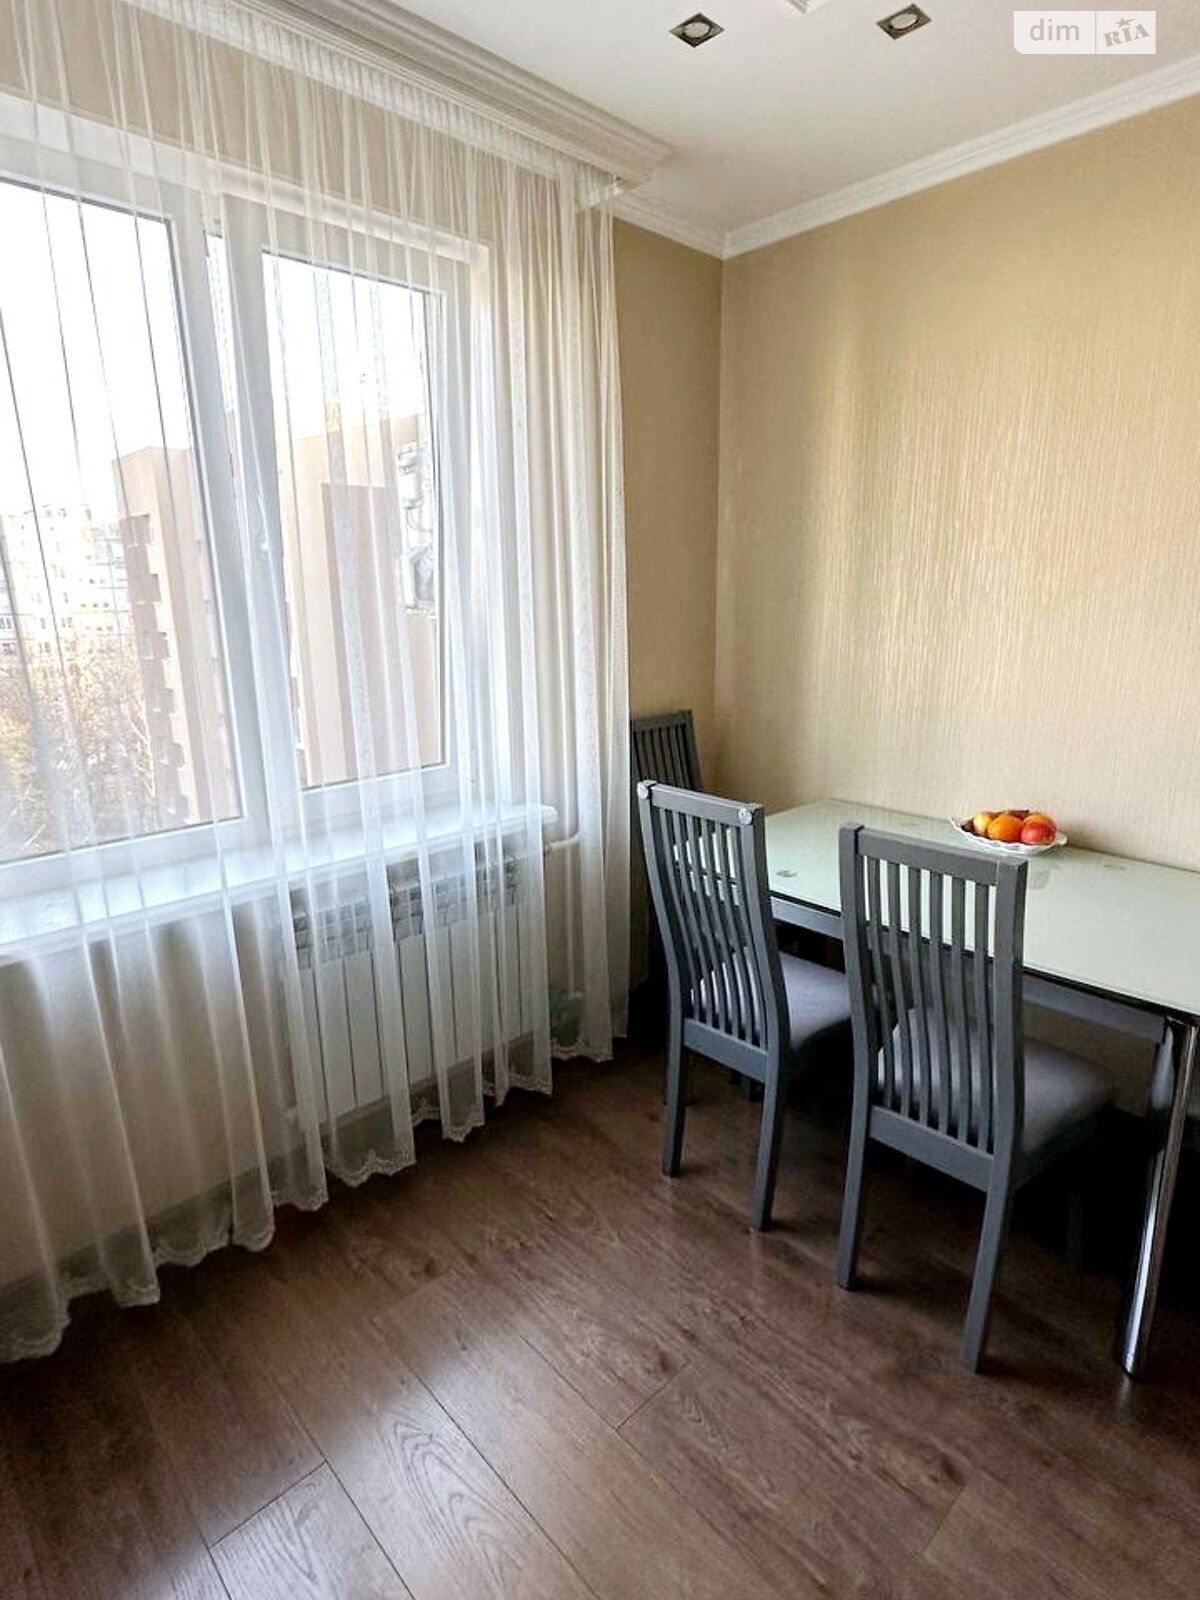 Продажа однокомнатной квартиры в Ровно, на ул. Фабричная 1, район Ленокомбинат фото 1